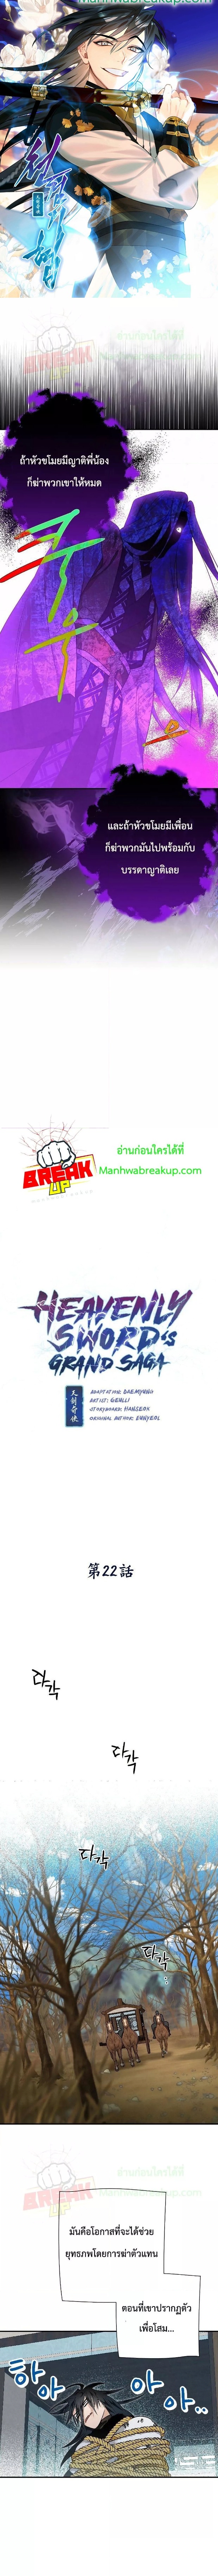 Heavenly Sword’s Grand Saga22 (1)